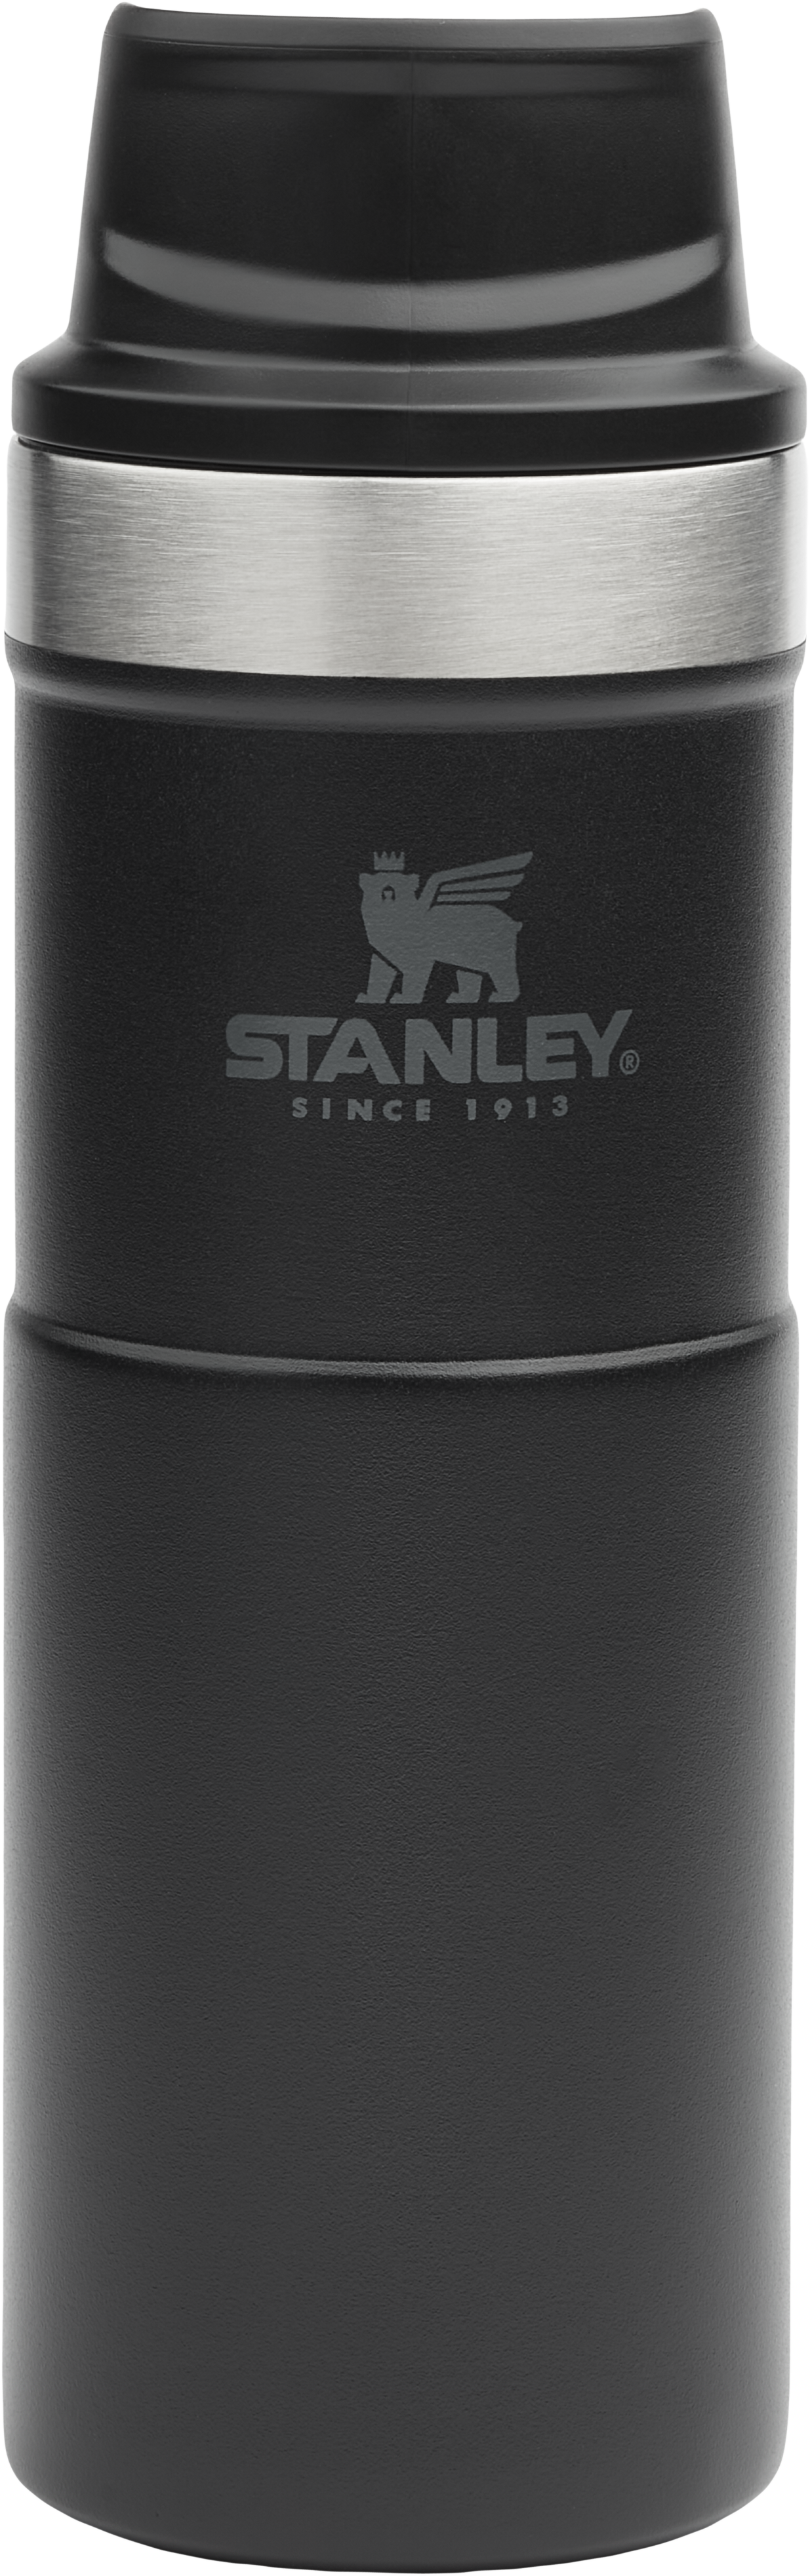 Stanley Iceflow Flip Straw Water Bottle, Gray 22 oz.